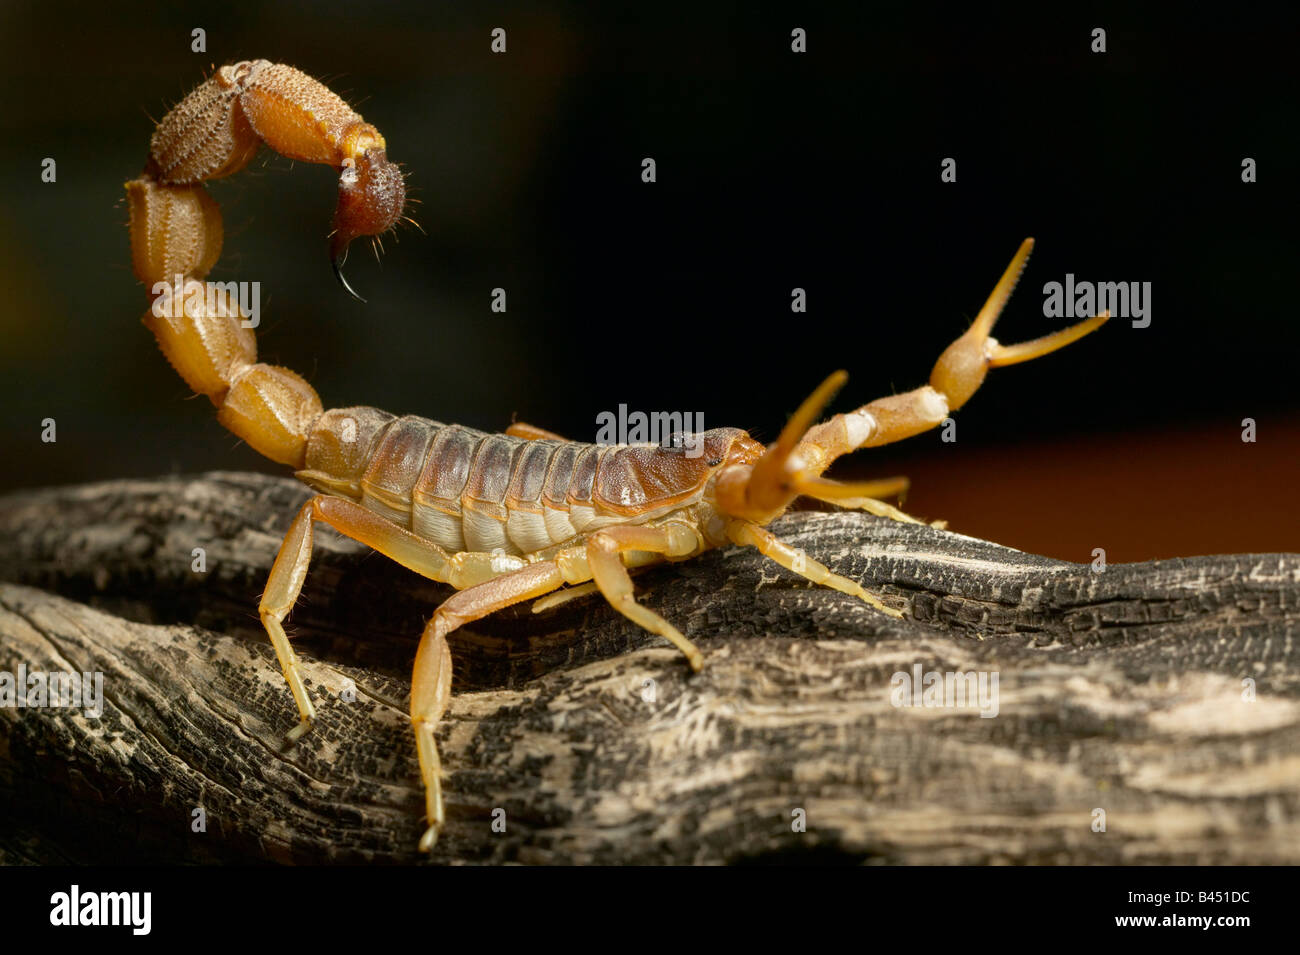 Cape Code spesse Scorpion (Parabuthus capensis) altamente velenosi Foto Stock